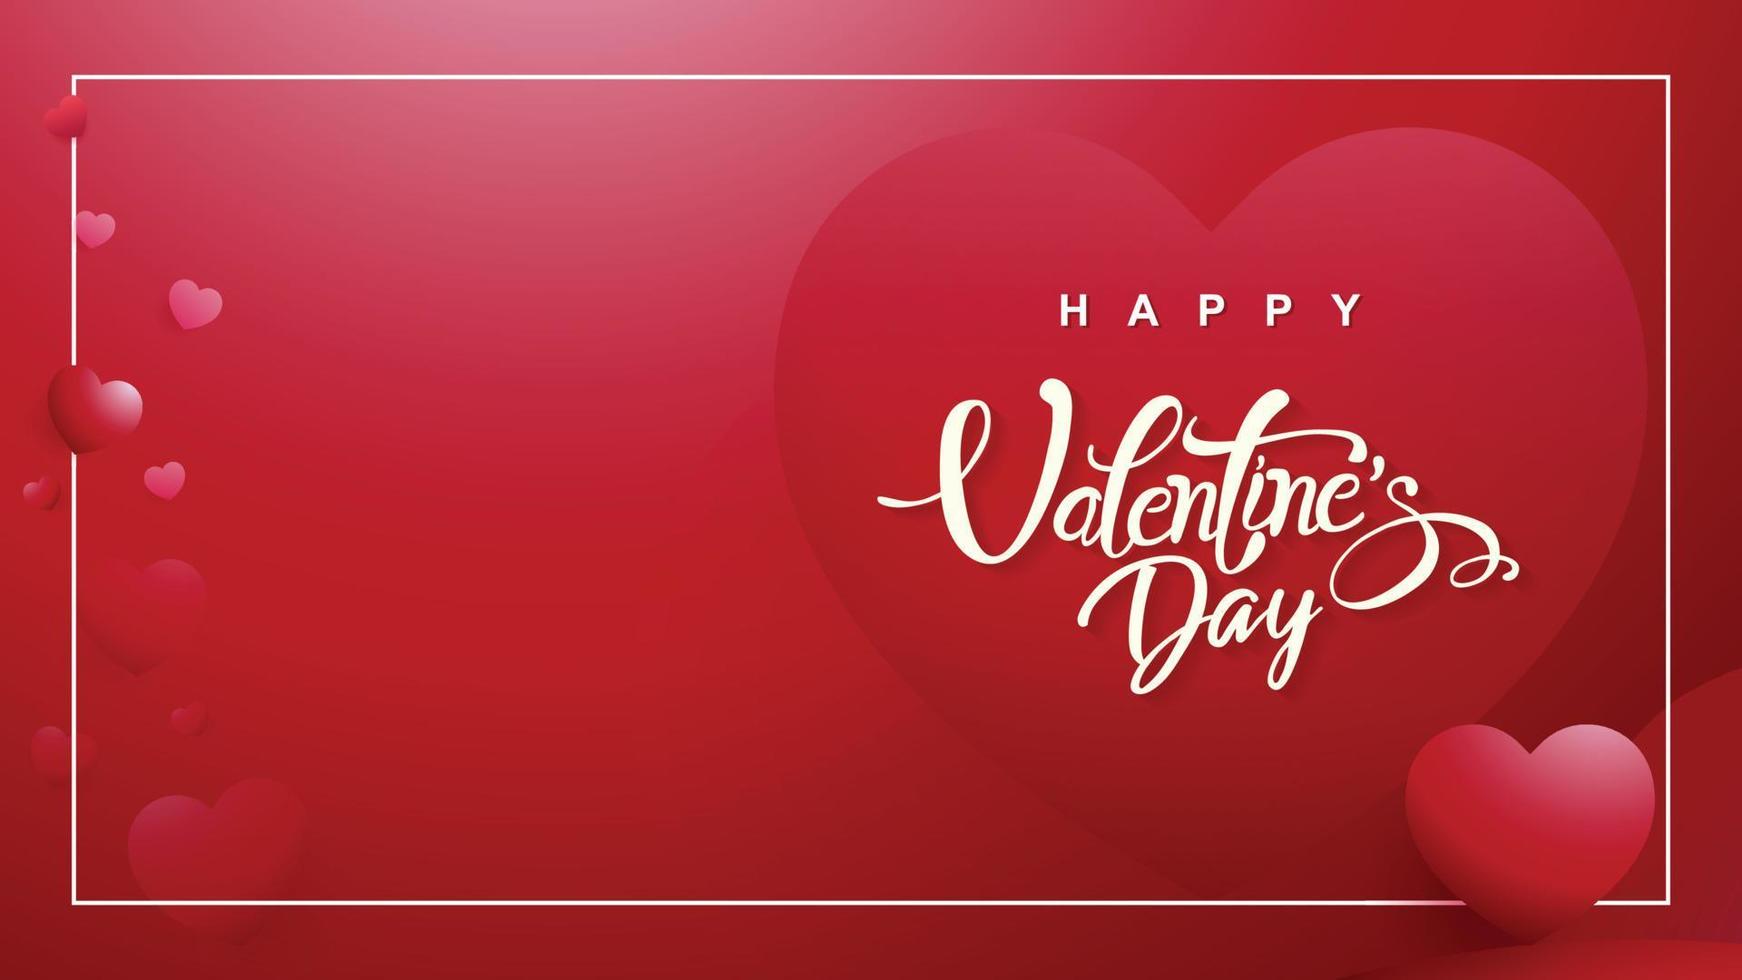 Happy valentine day - 14 February poster. Valentines day background. Valentine's Day greeting card vector design illustration. Happy Valentine's Day background.  Love heart design template. love heart